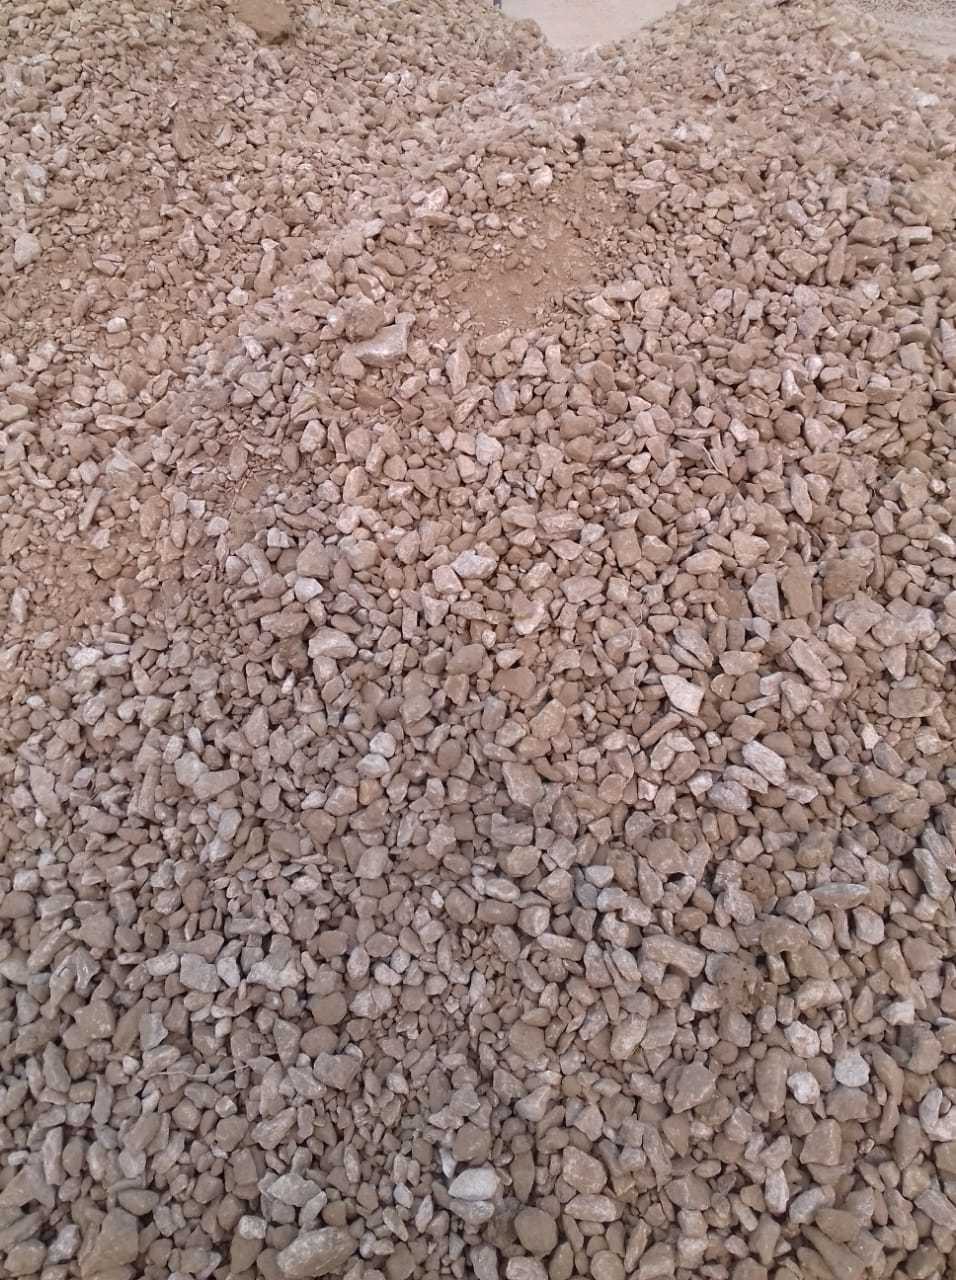 Imported Pakistan Gypsum